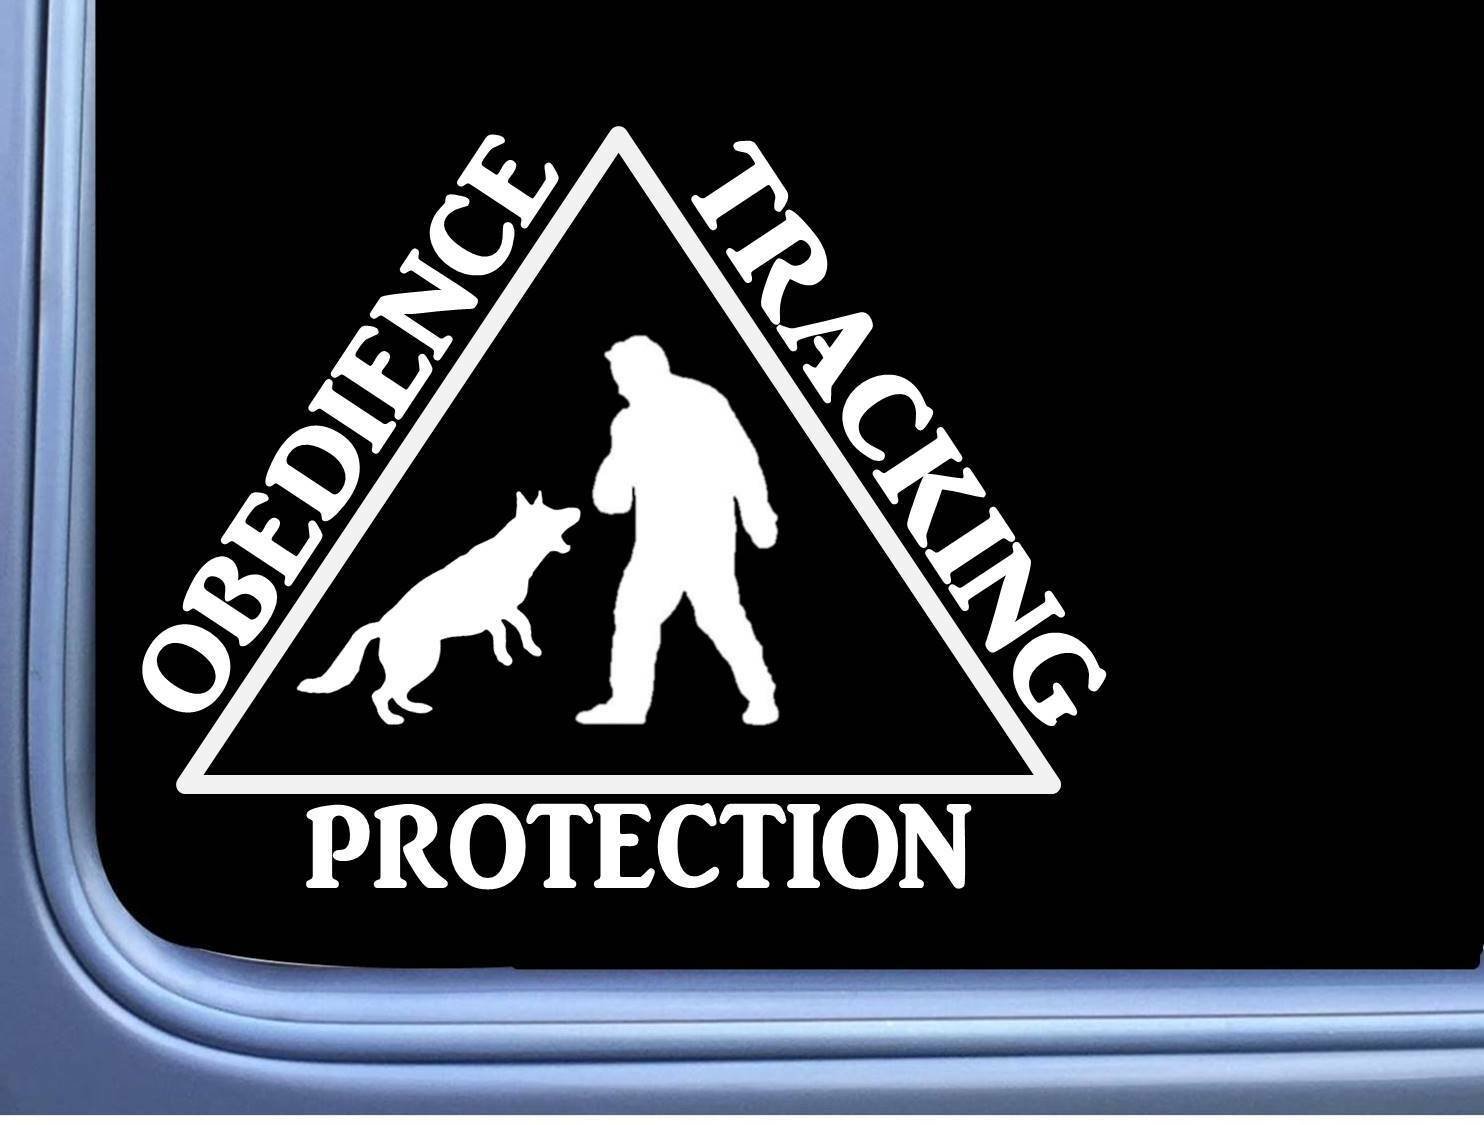 Schutzhund Tracking Obnedience Protection M349 6 inch Sticker Decal dog k9